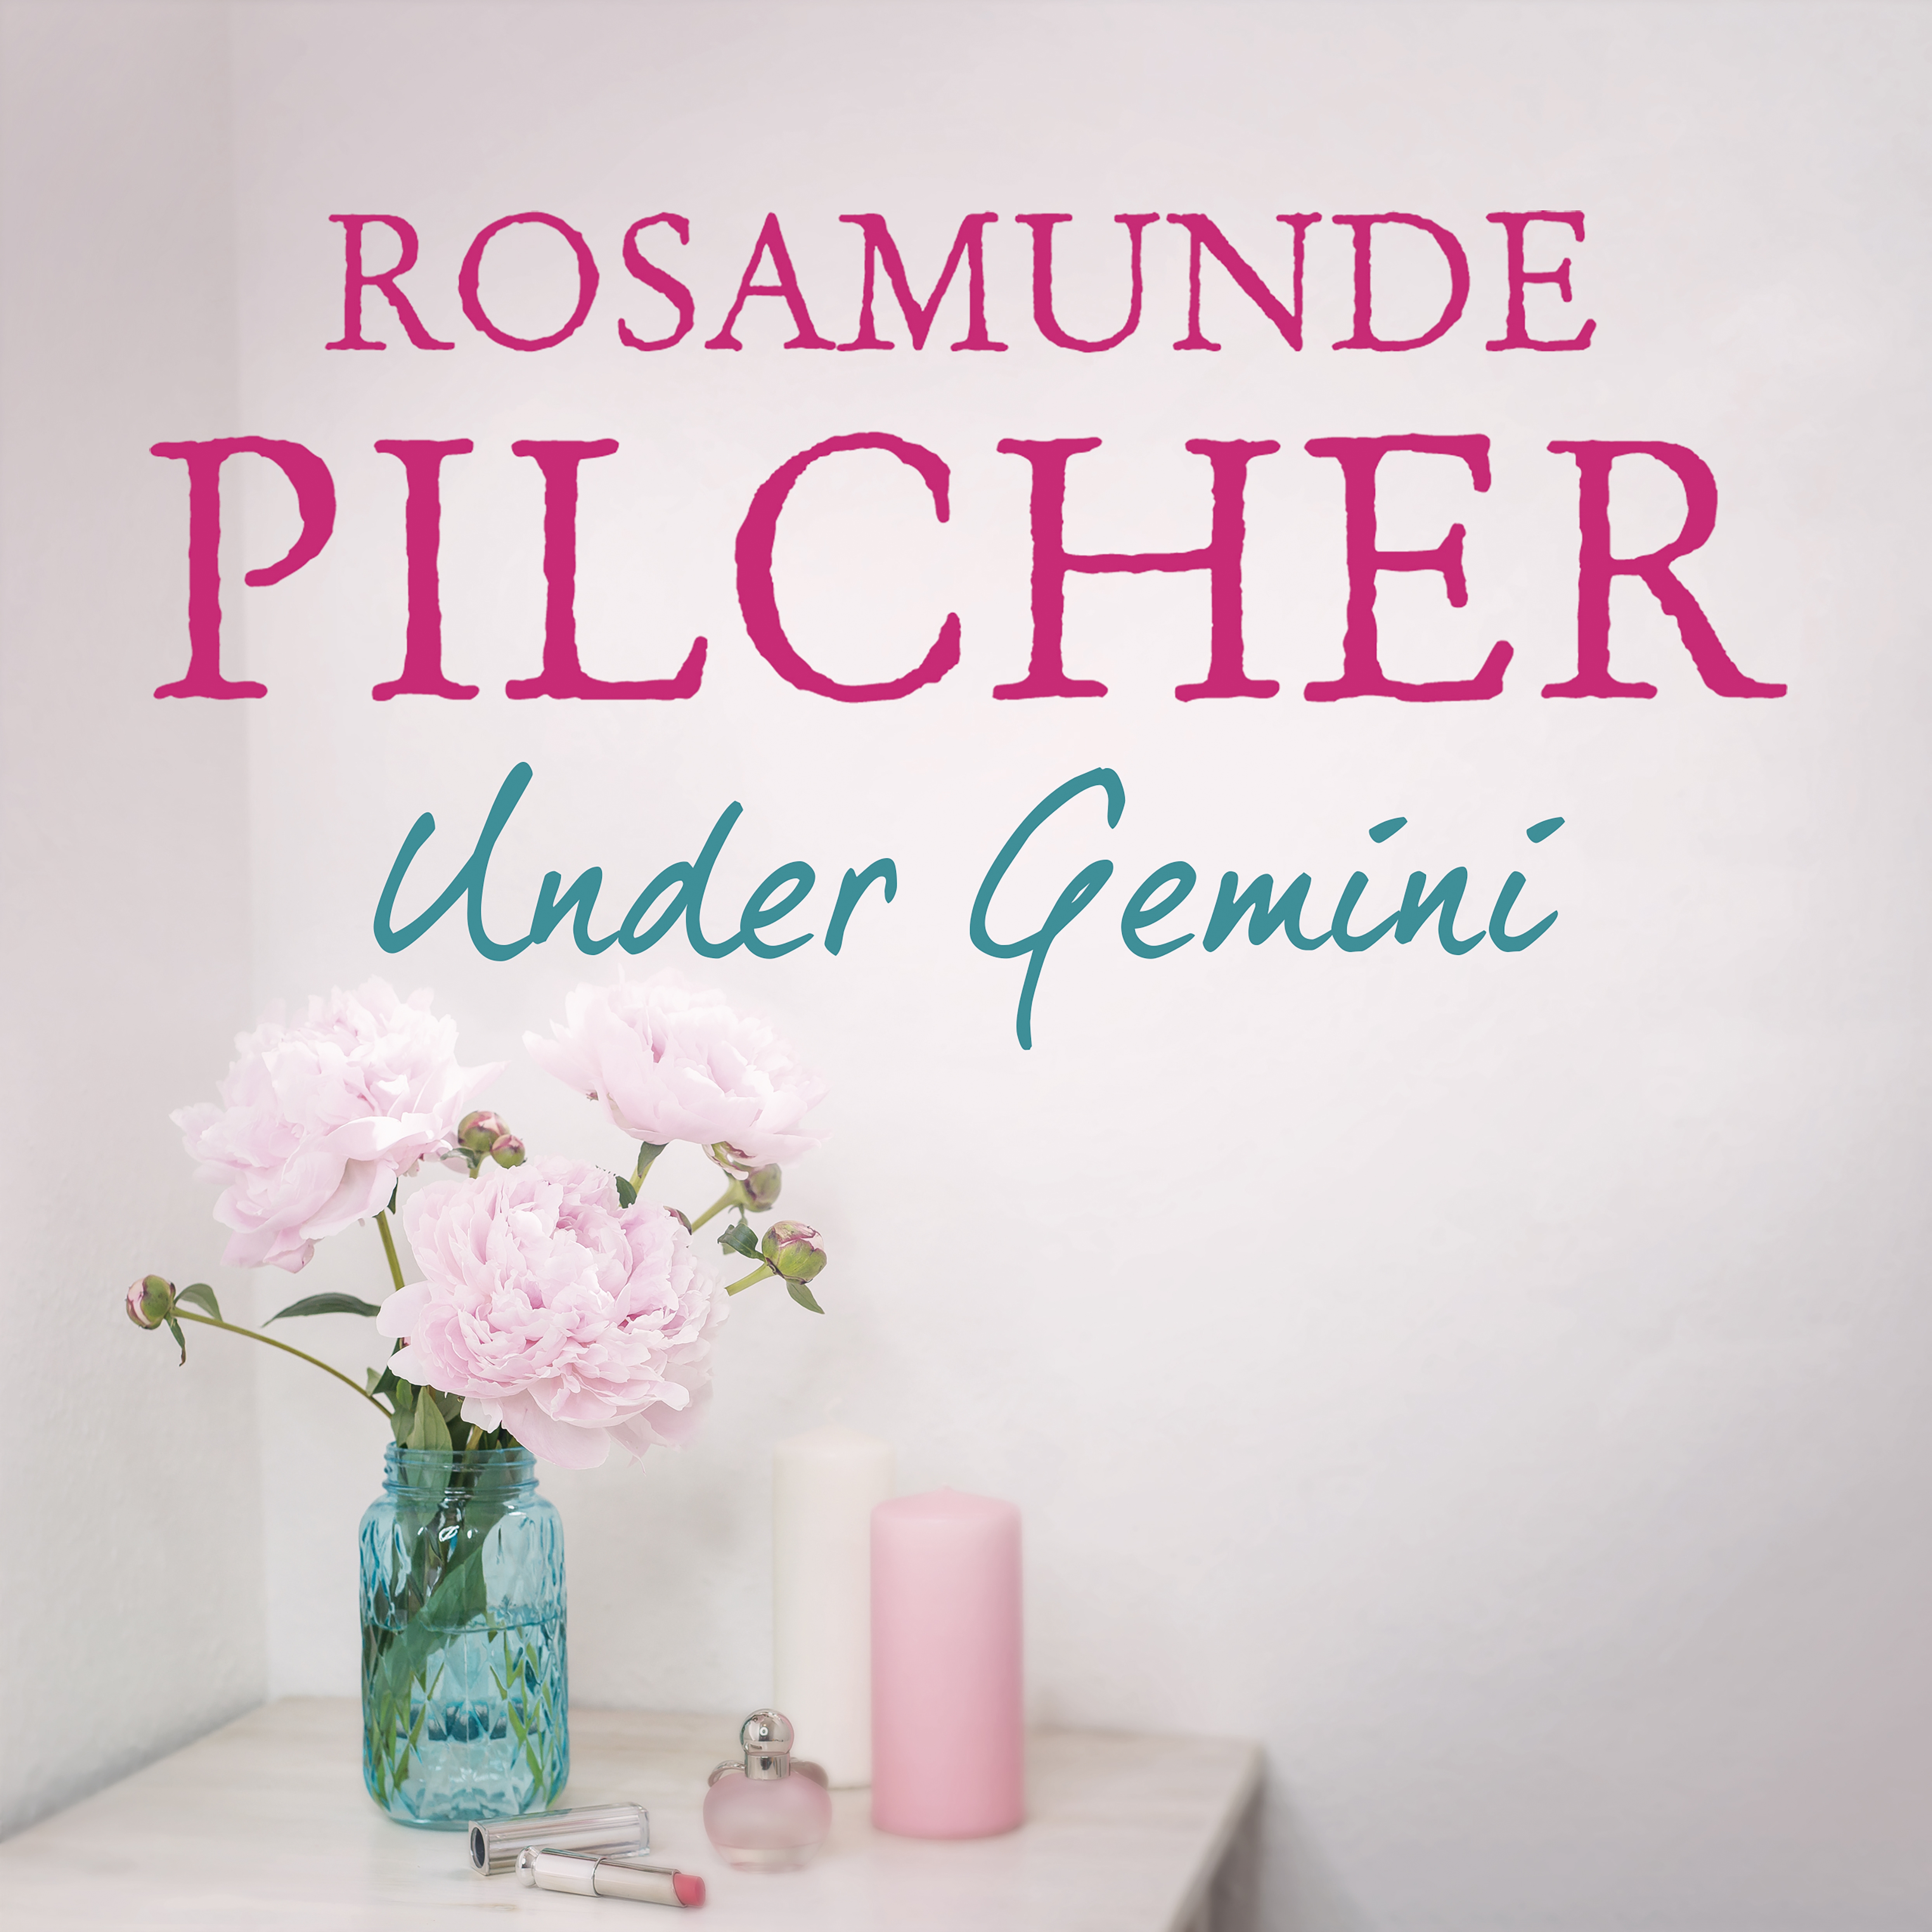 UNDER GEMINI by Rosamunde Pilcher